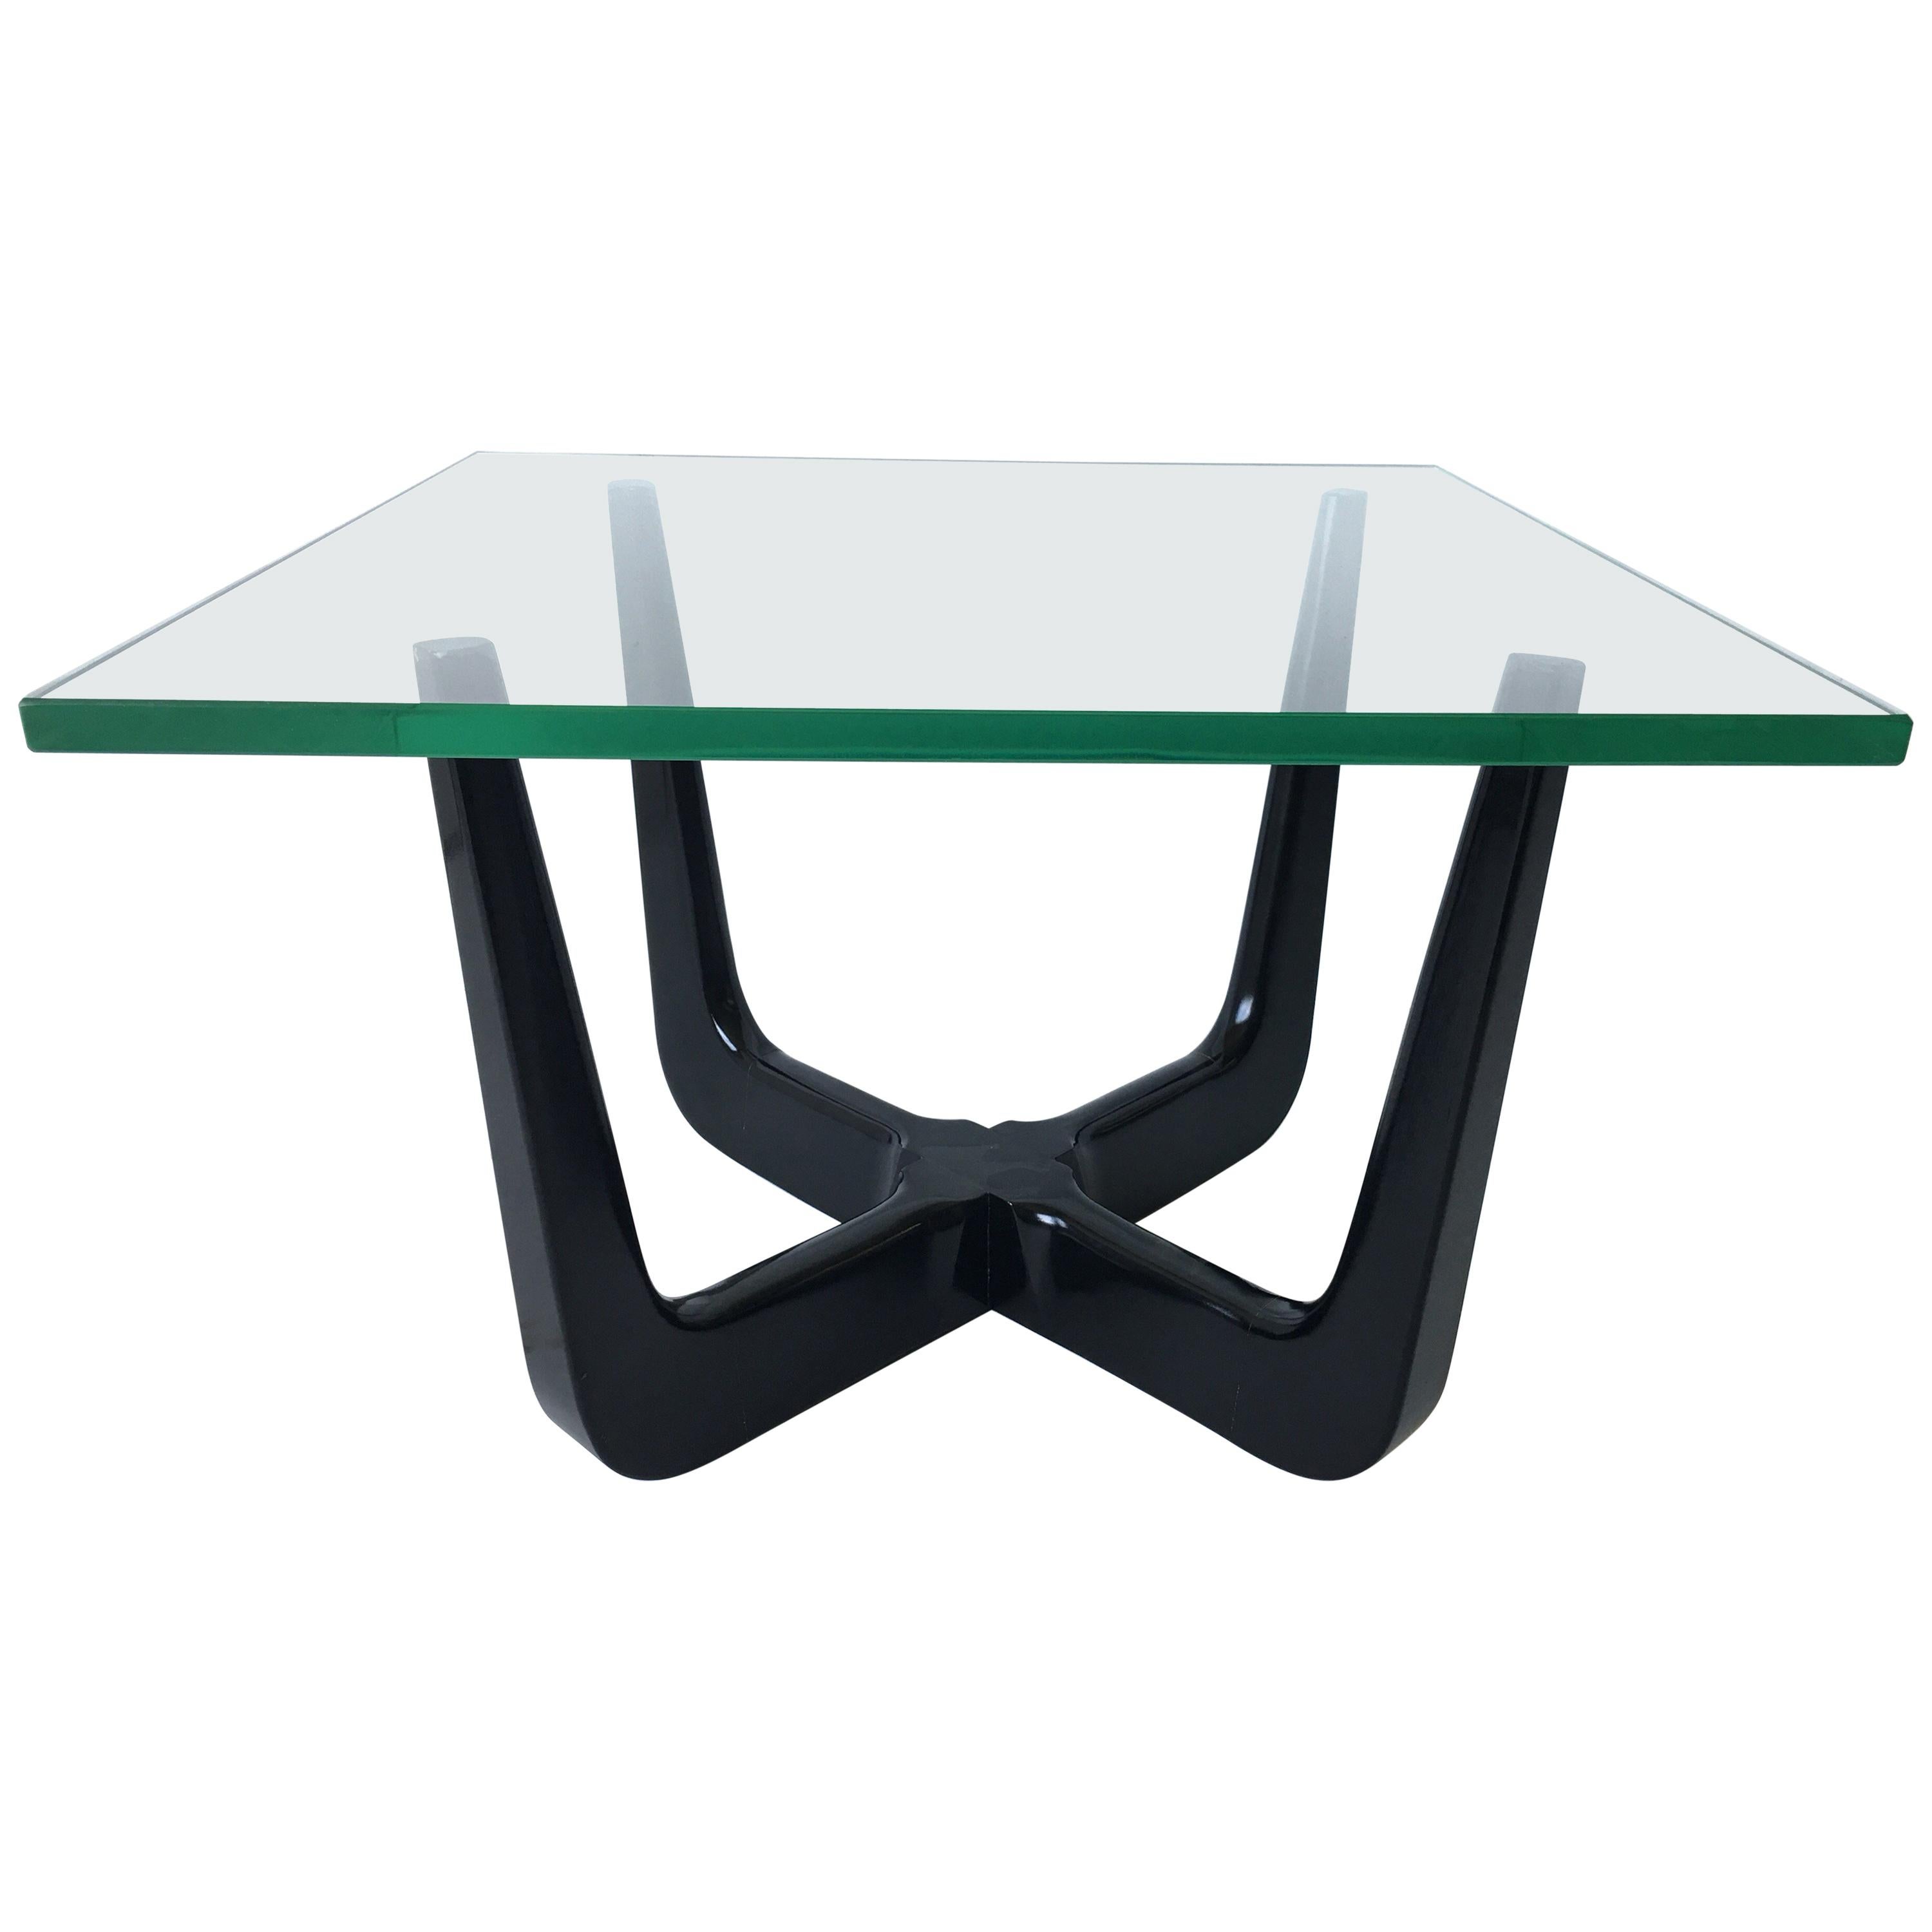 Paul Laszlo Interior Table For Sale